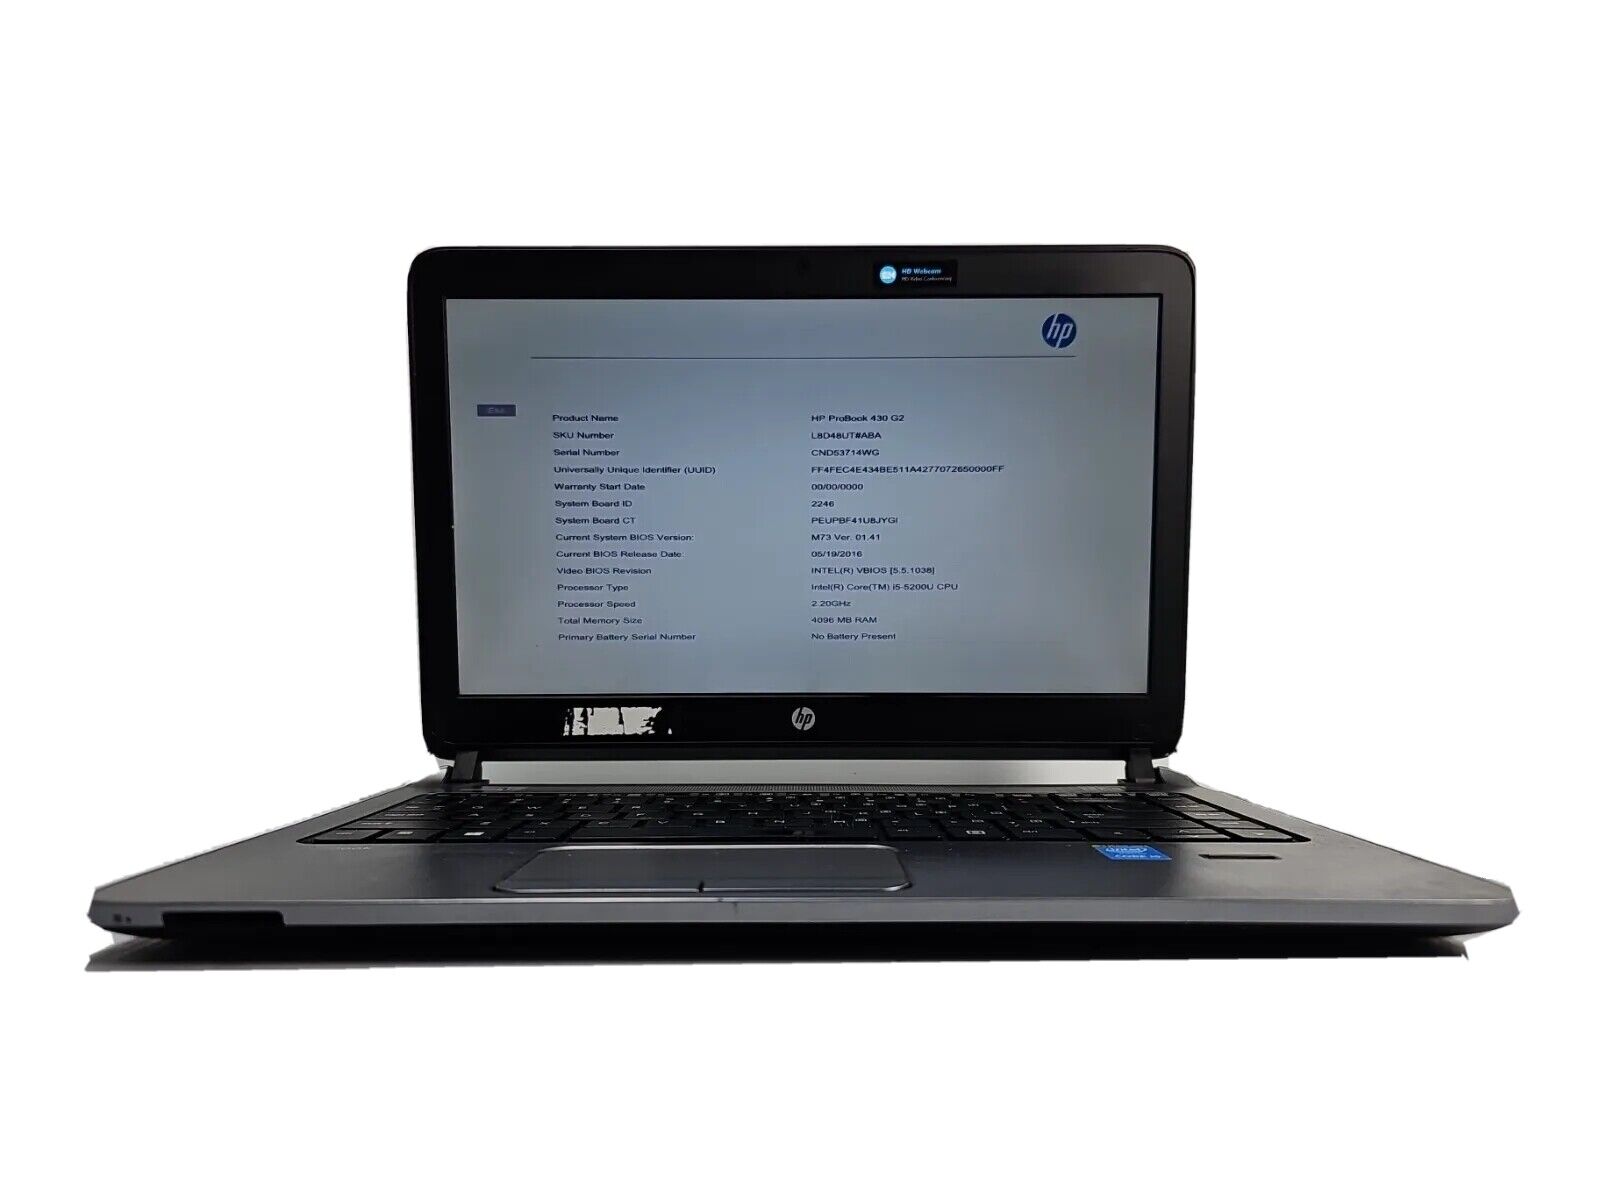 HP ProBook 430 G2 13.3 i5-5200u 2.2GHz 4GB RAM NO HDD/BATTERY 